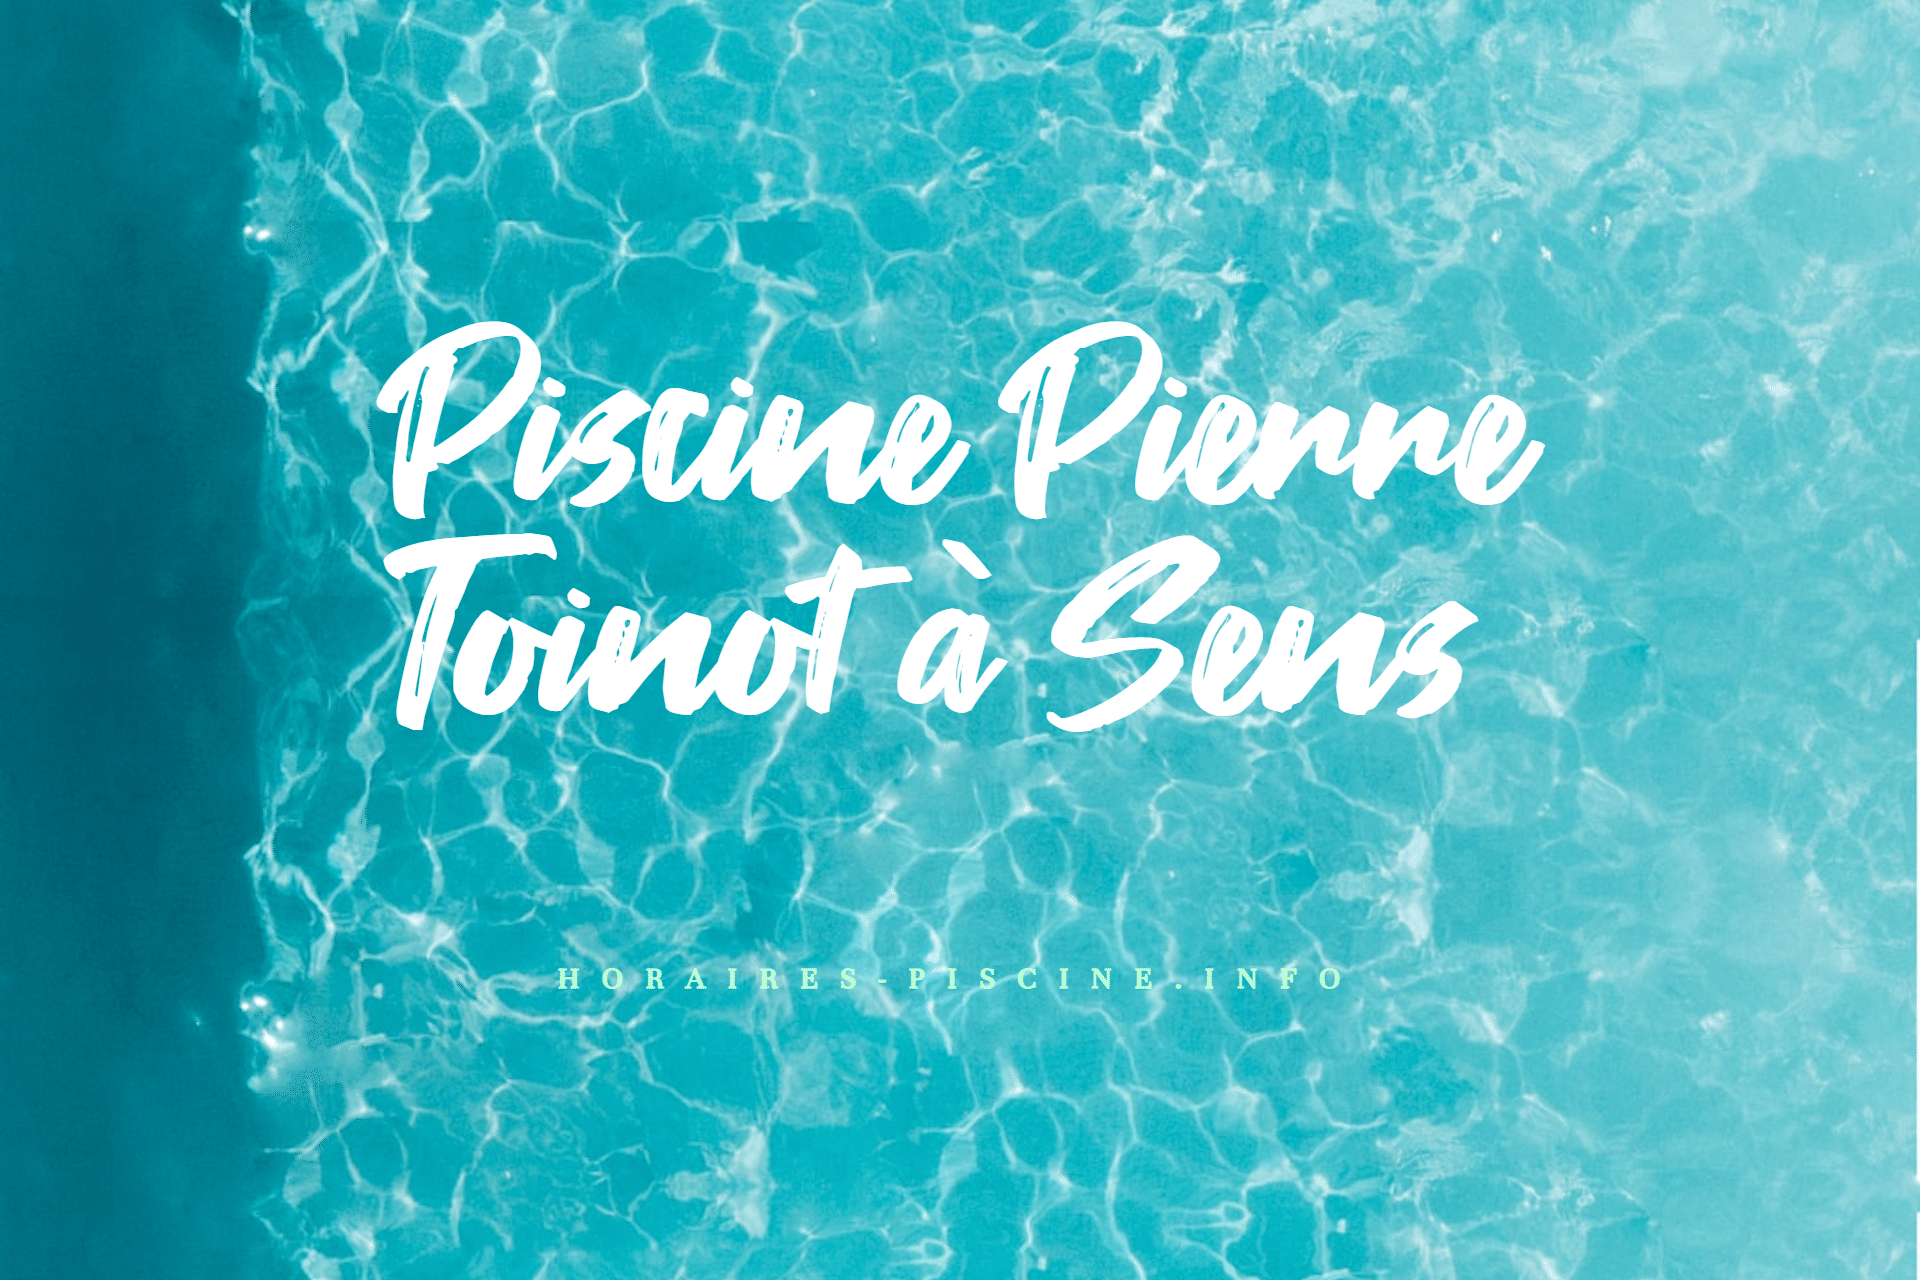 Piscine Pierre Toinot à Sens